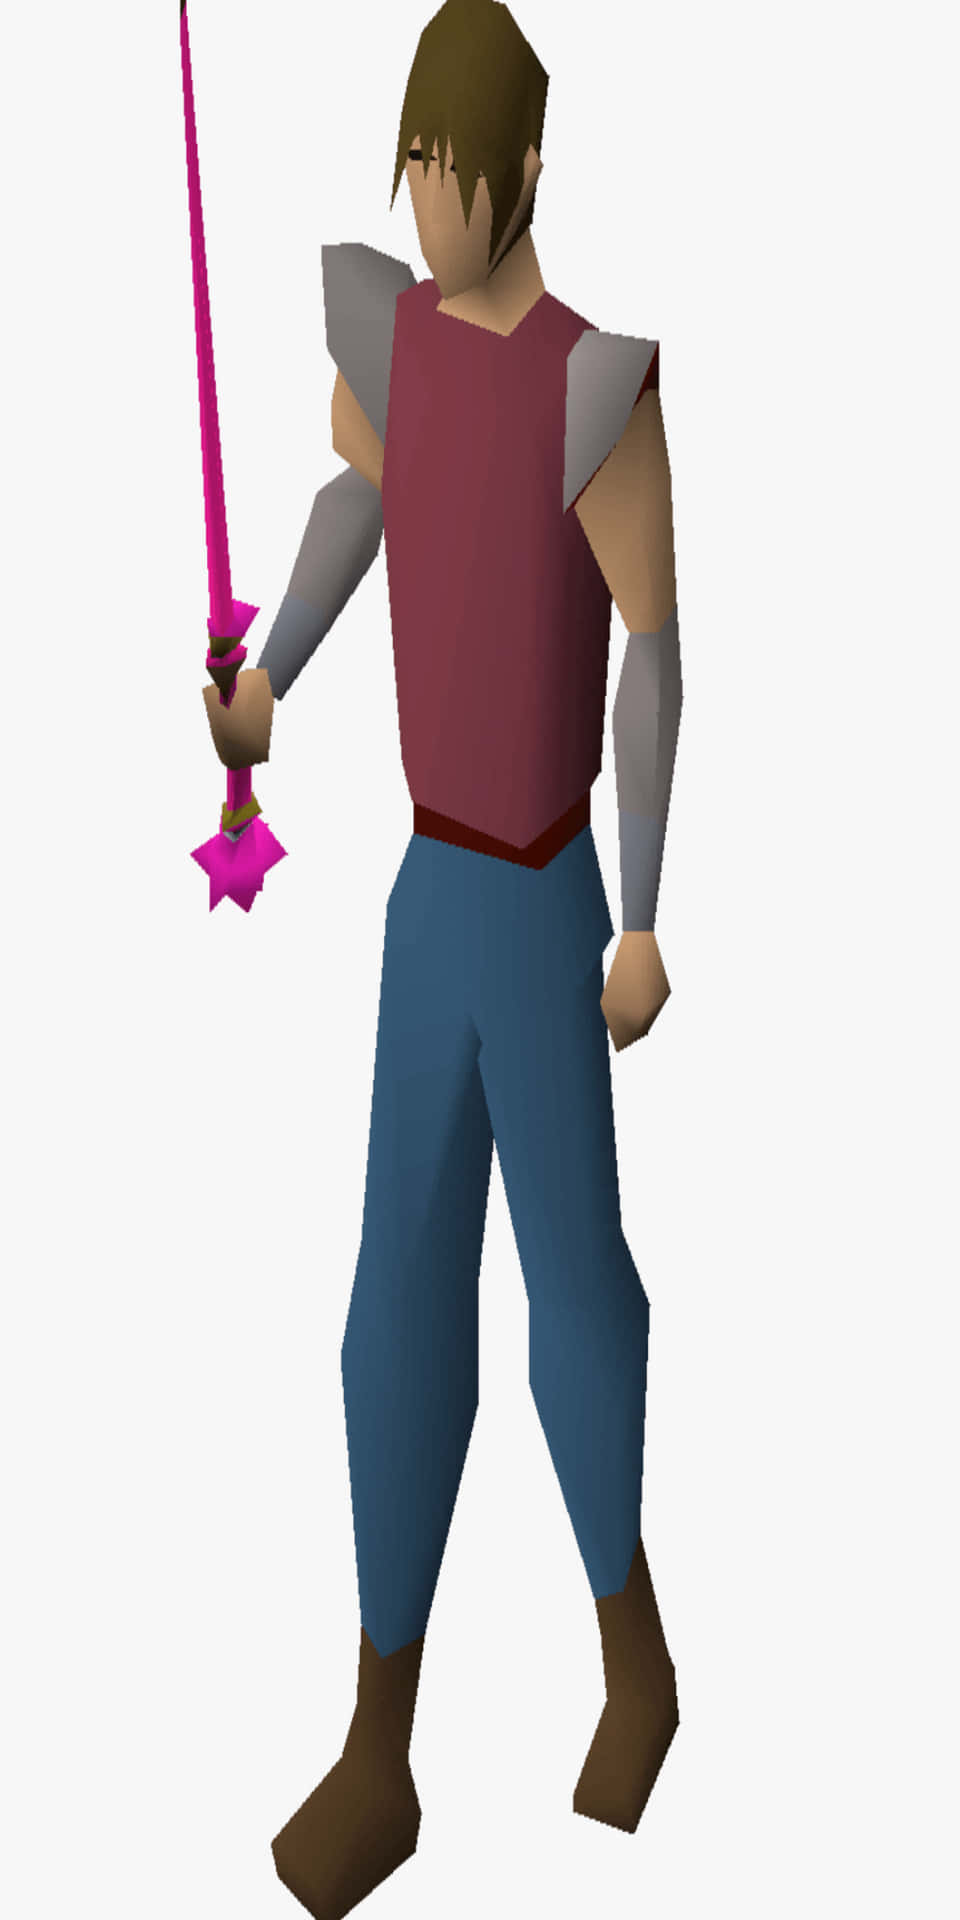 A 3d Model Of A Man Holding A Sword